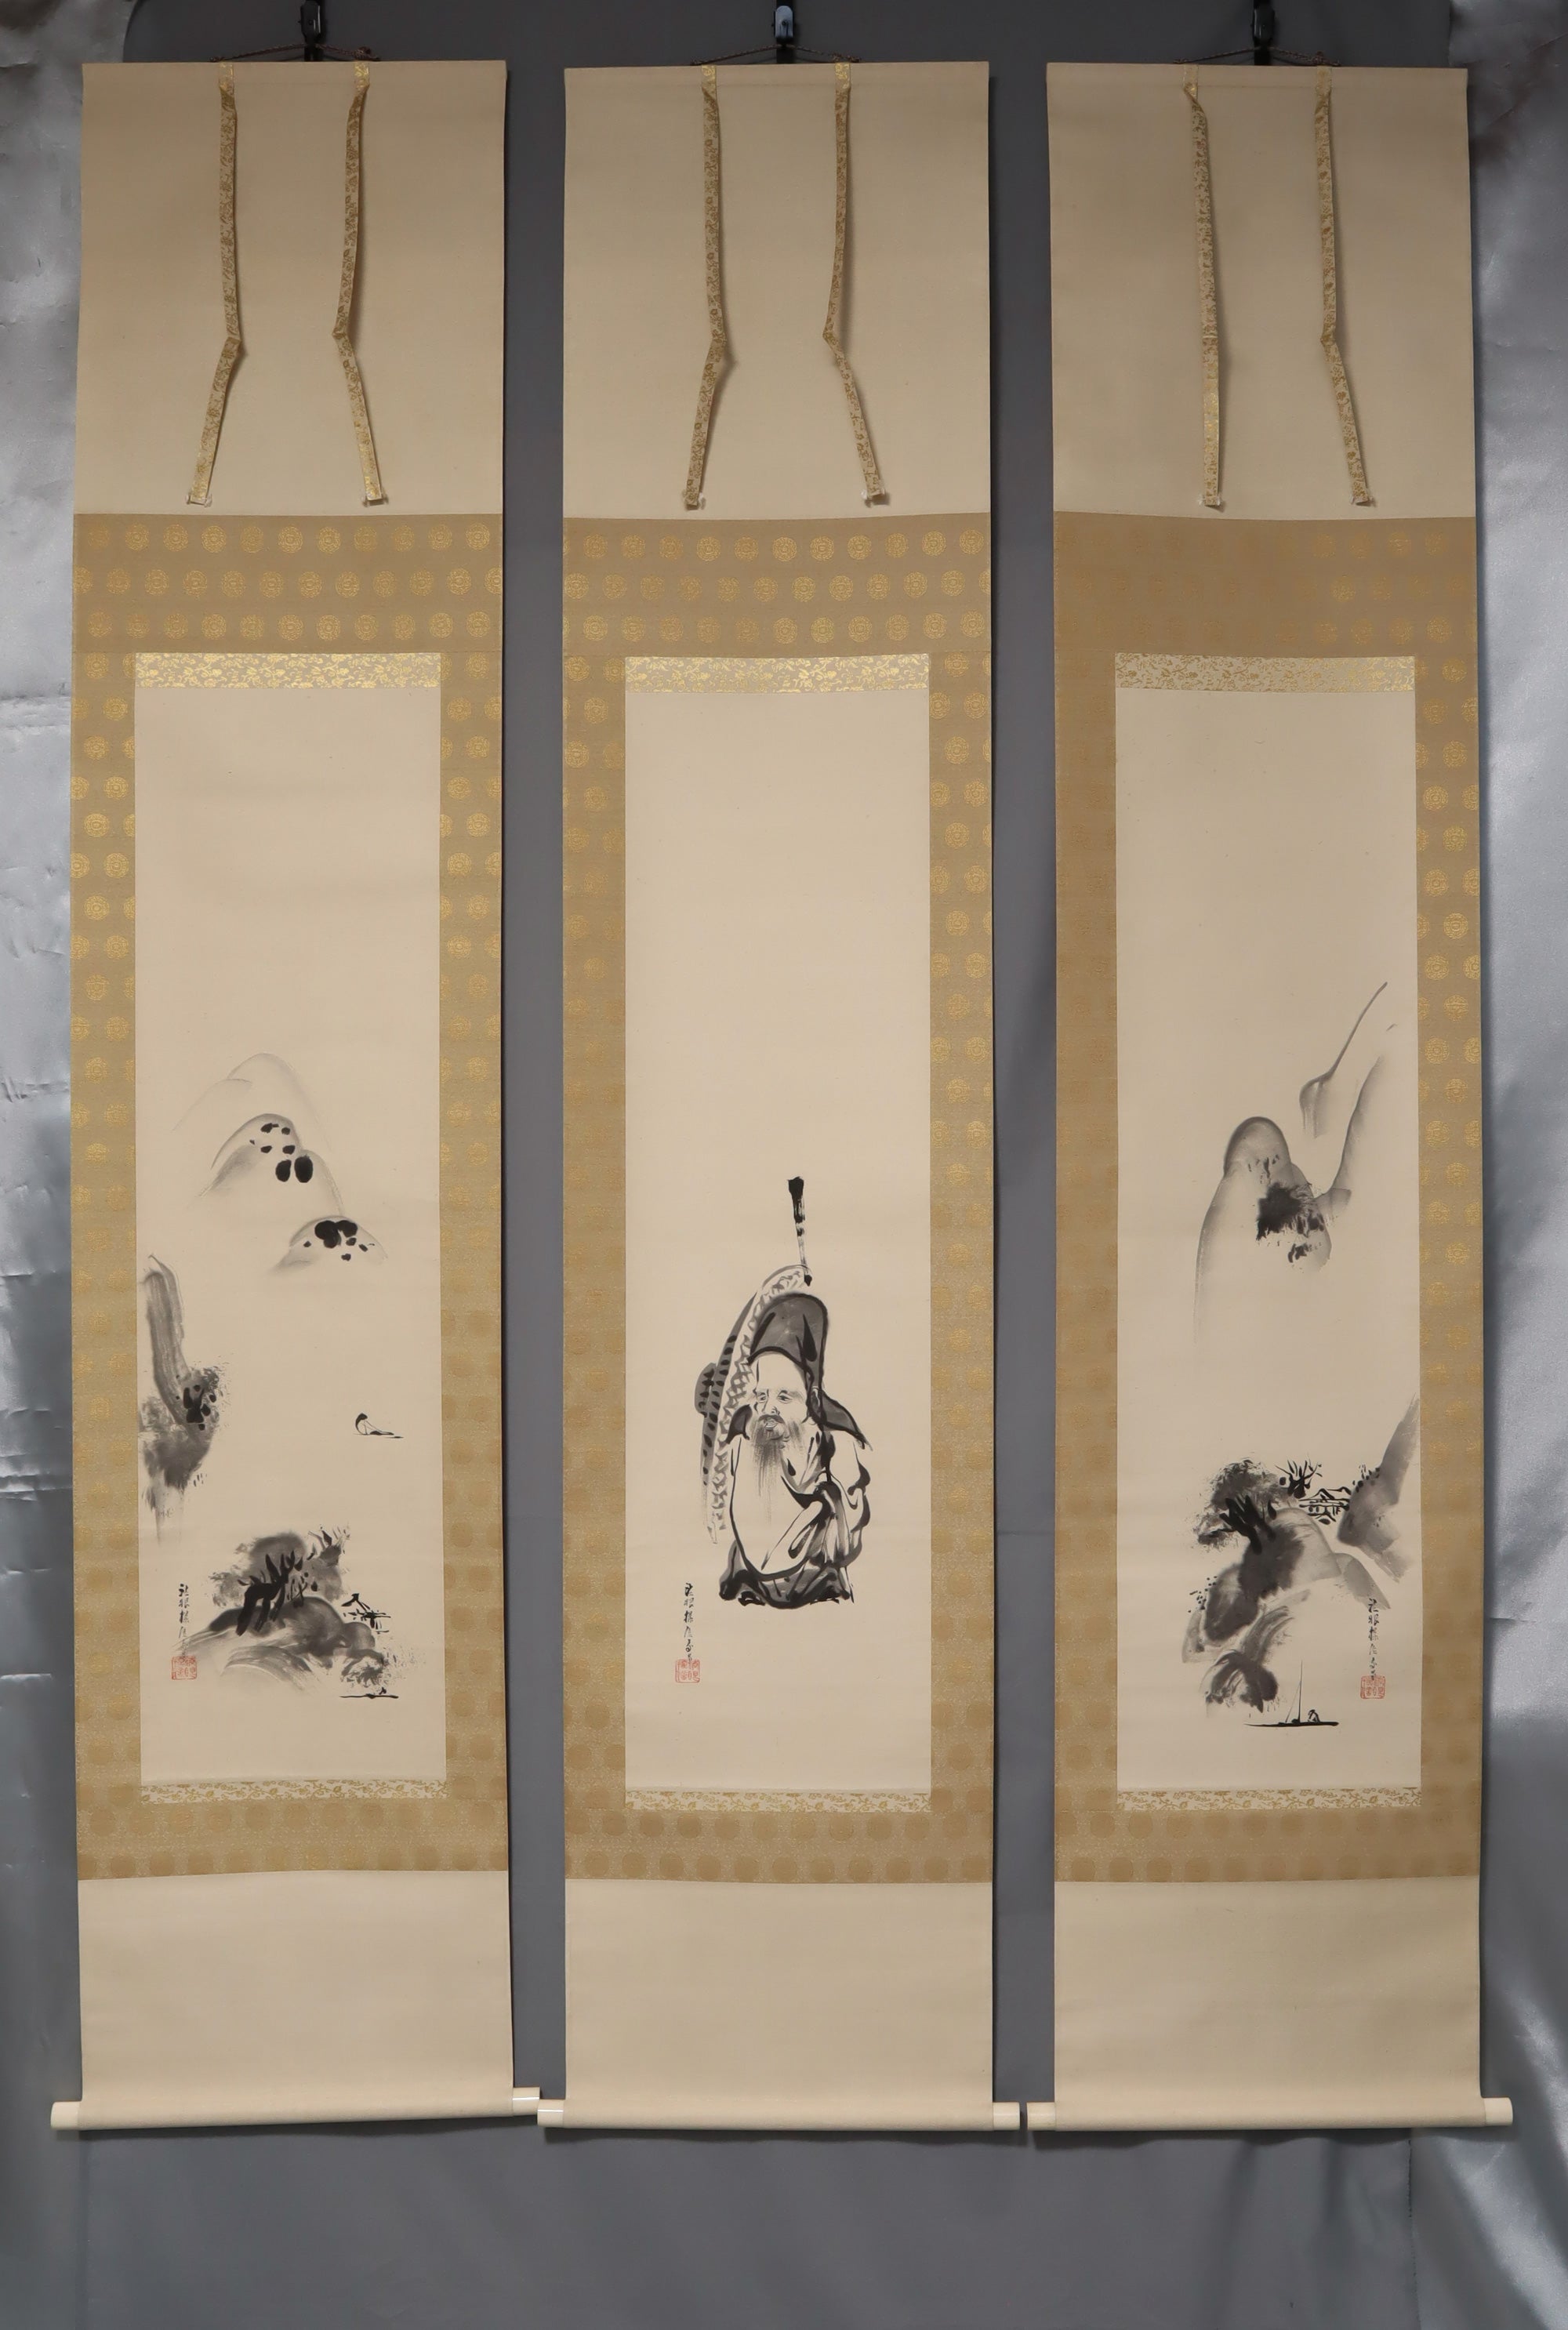 Kano Tanshin（Morimichi）（1785-1836）“ Fukurokuju and Landscape”中江户时代